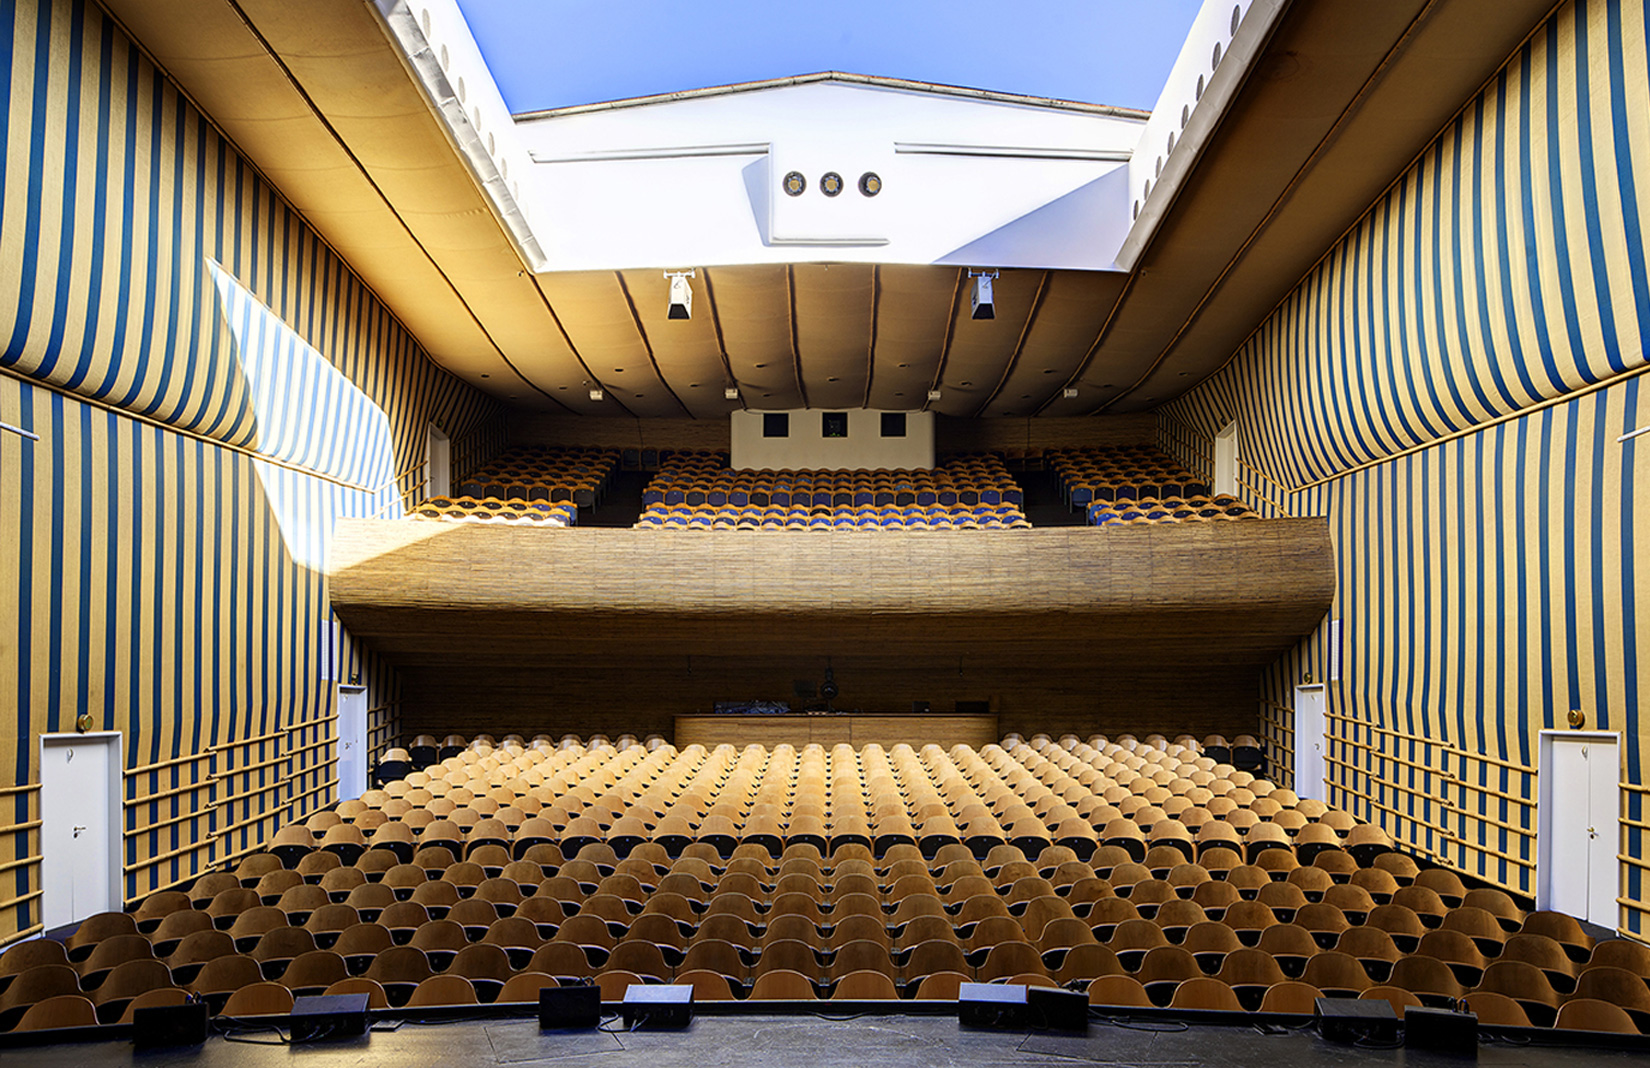 https://thespaces.com/wp-content/uploads/2016/02/Arne-Jacobsen-theatre-interior.jpg